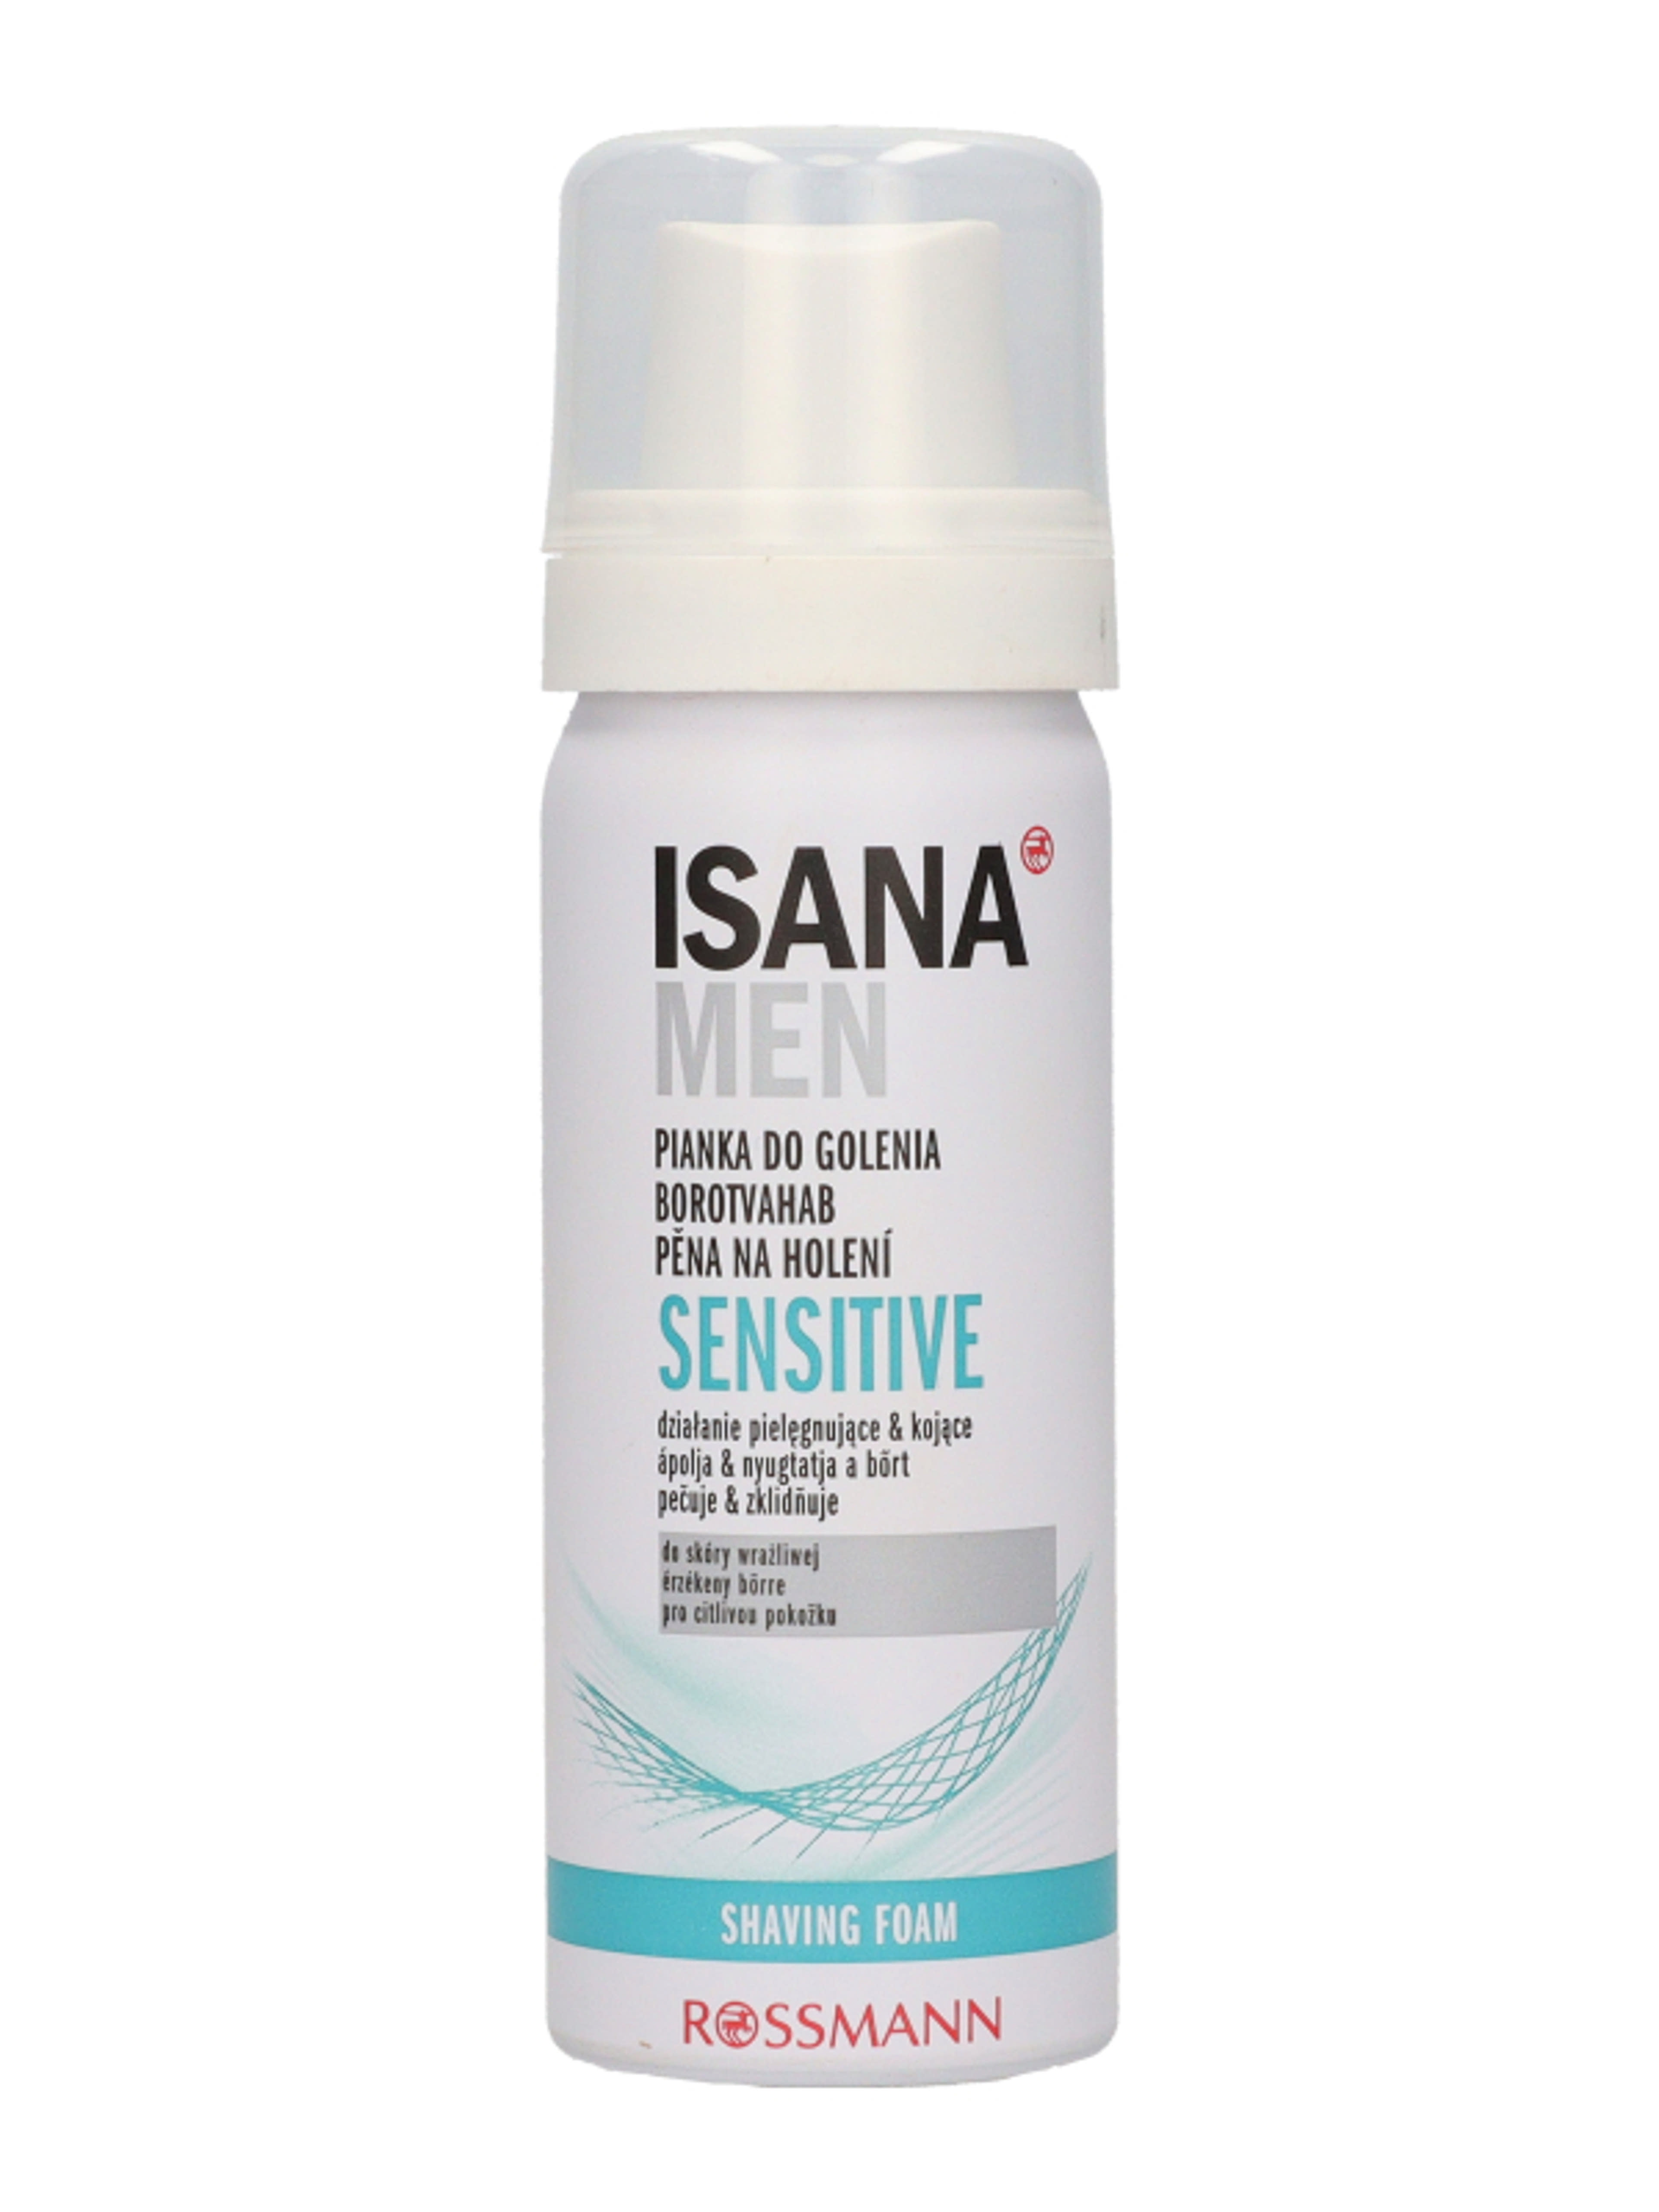 Isana Men Sensitive borotvahab - 50 ml-3